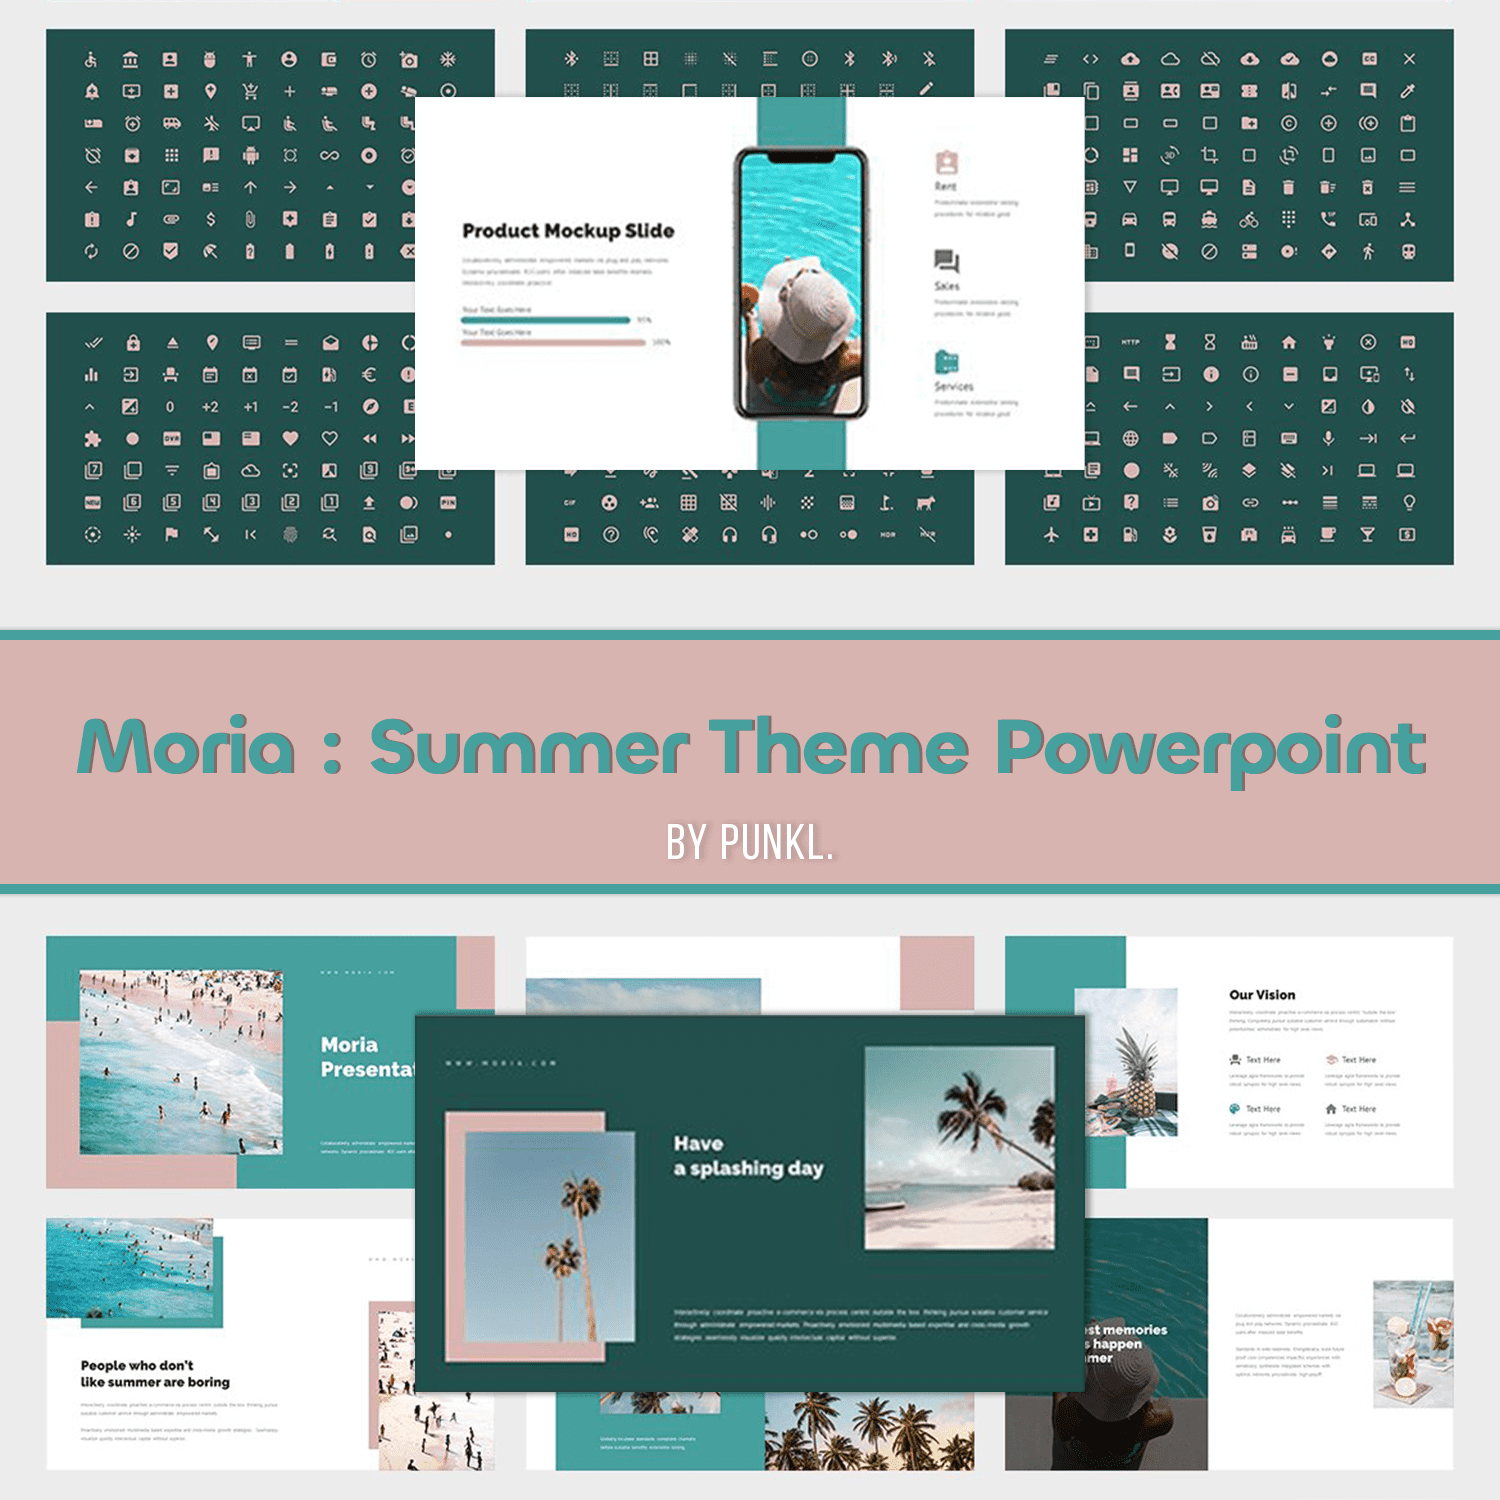 moria summer theme powerpoint.